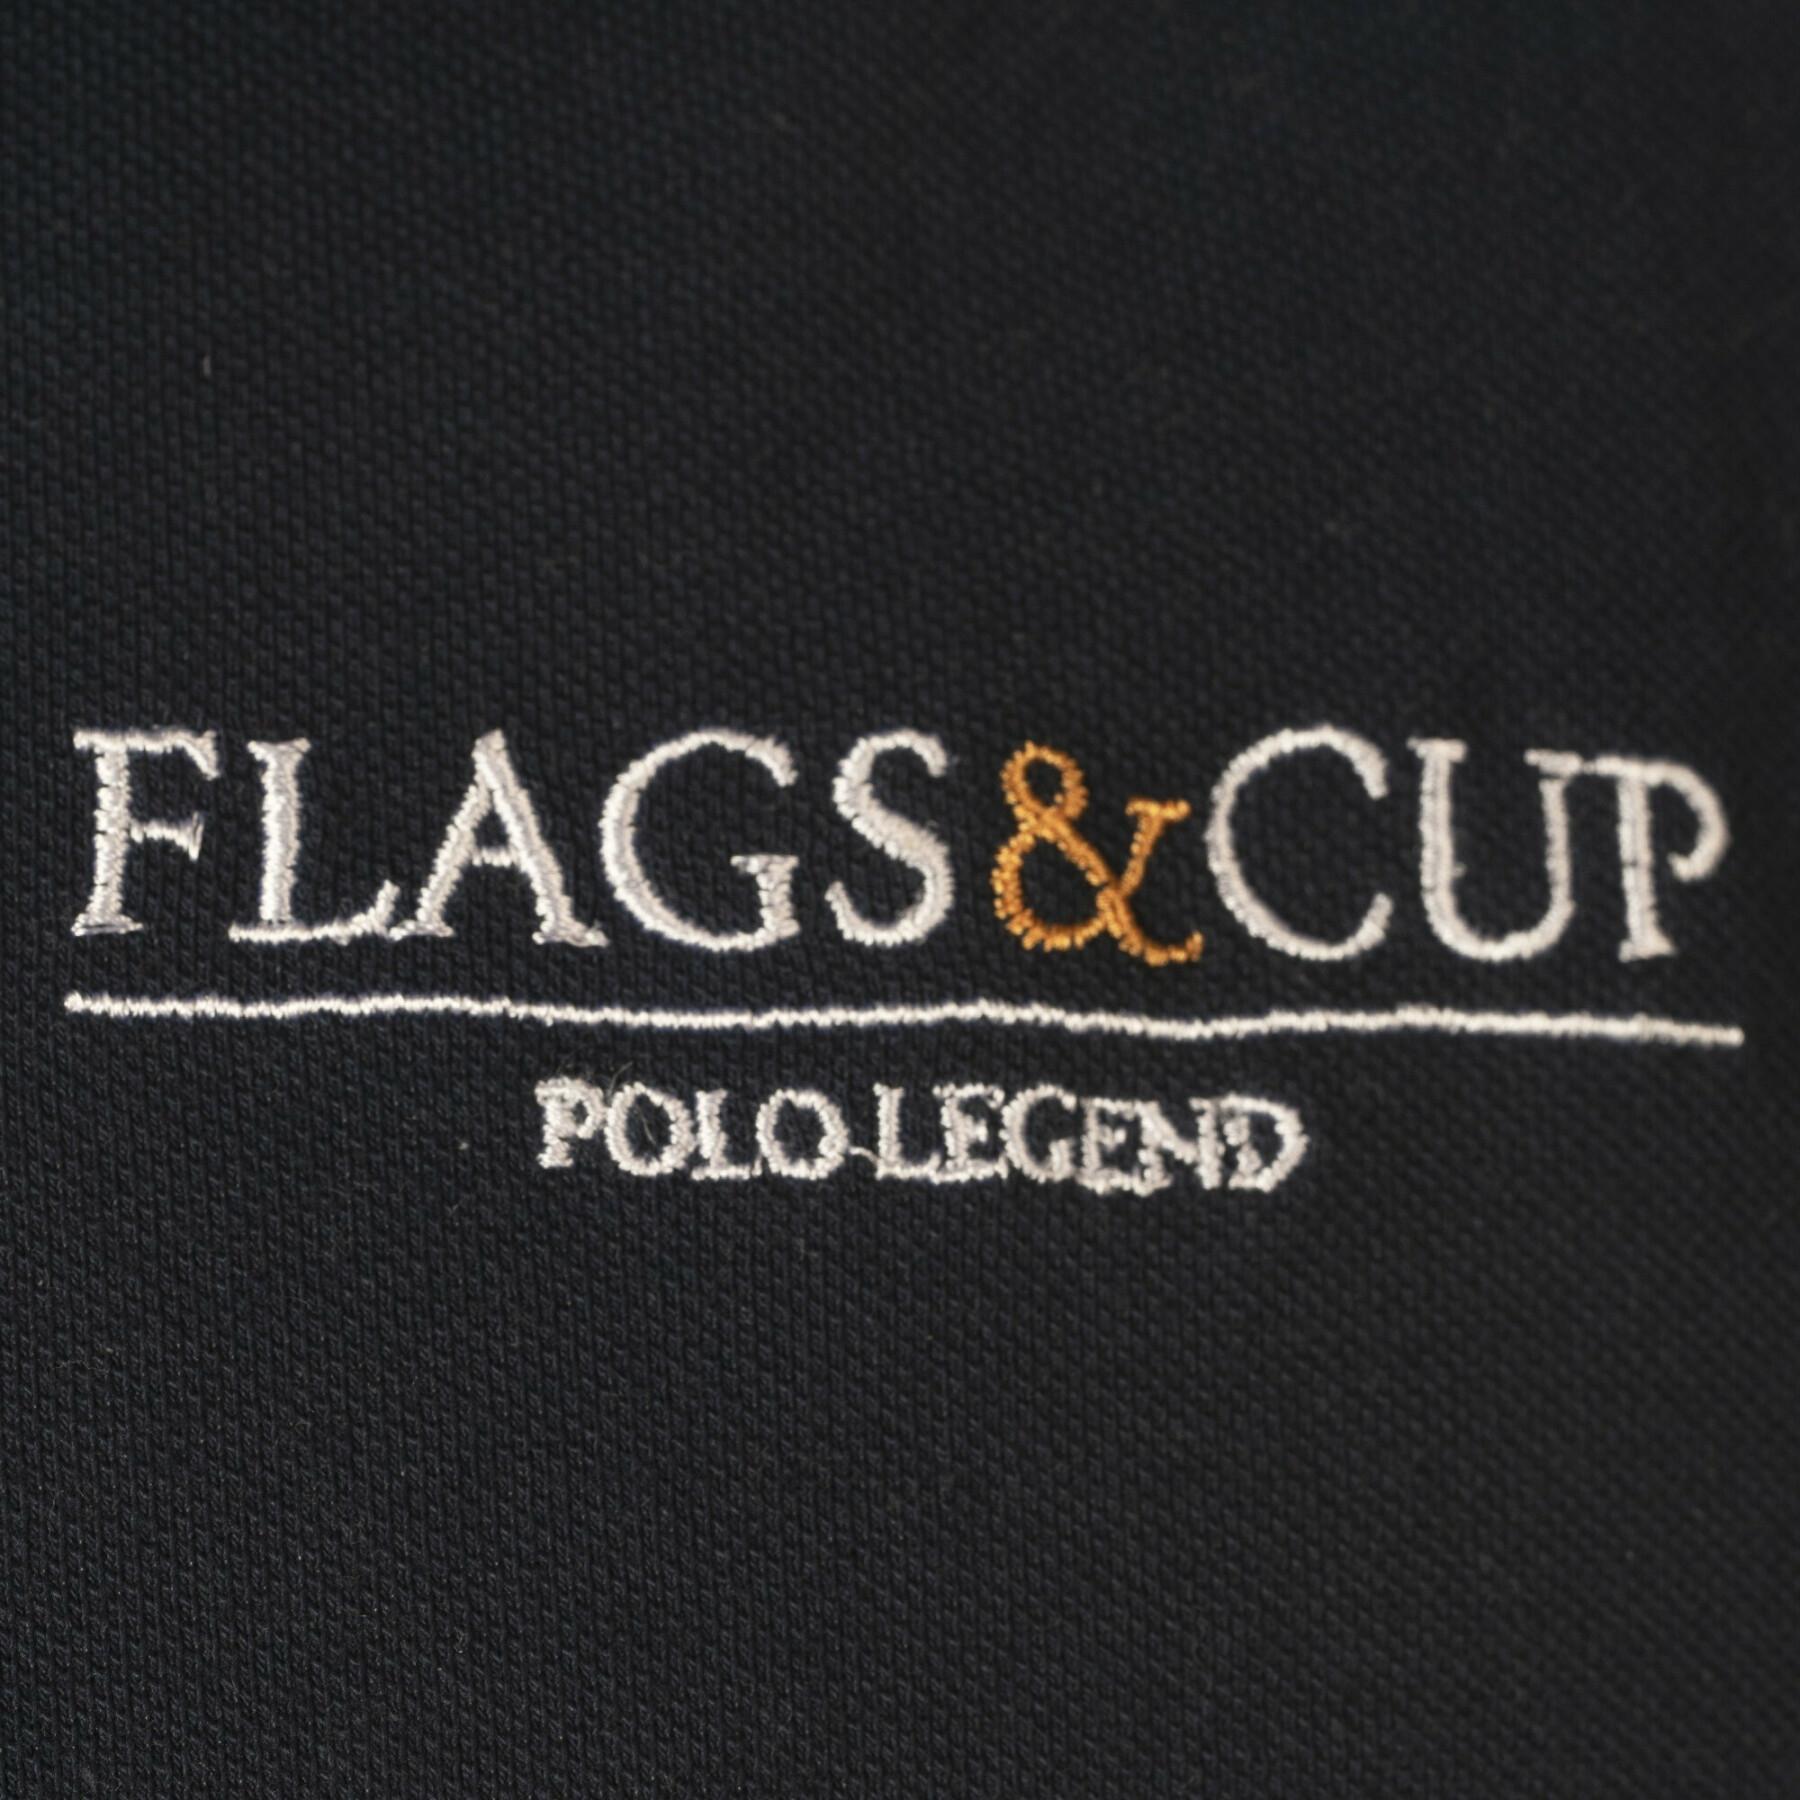 Riding Polo Flags&Cup Pico